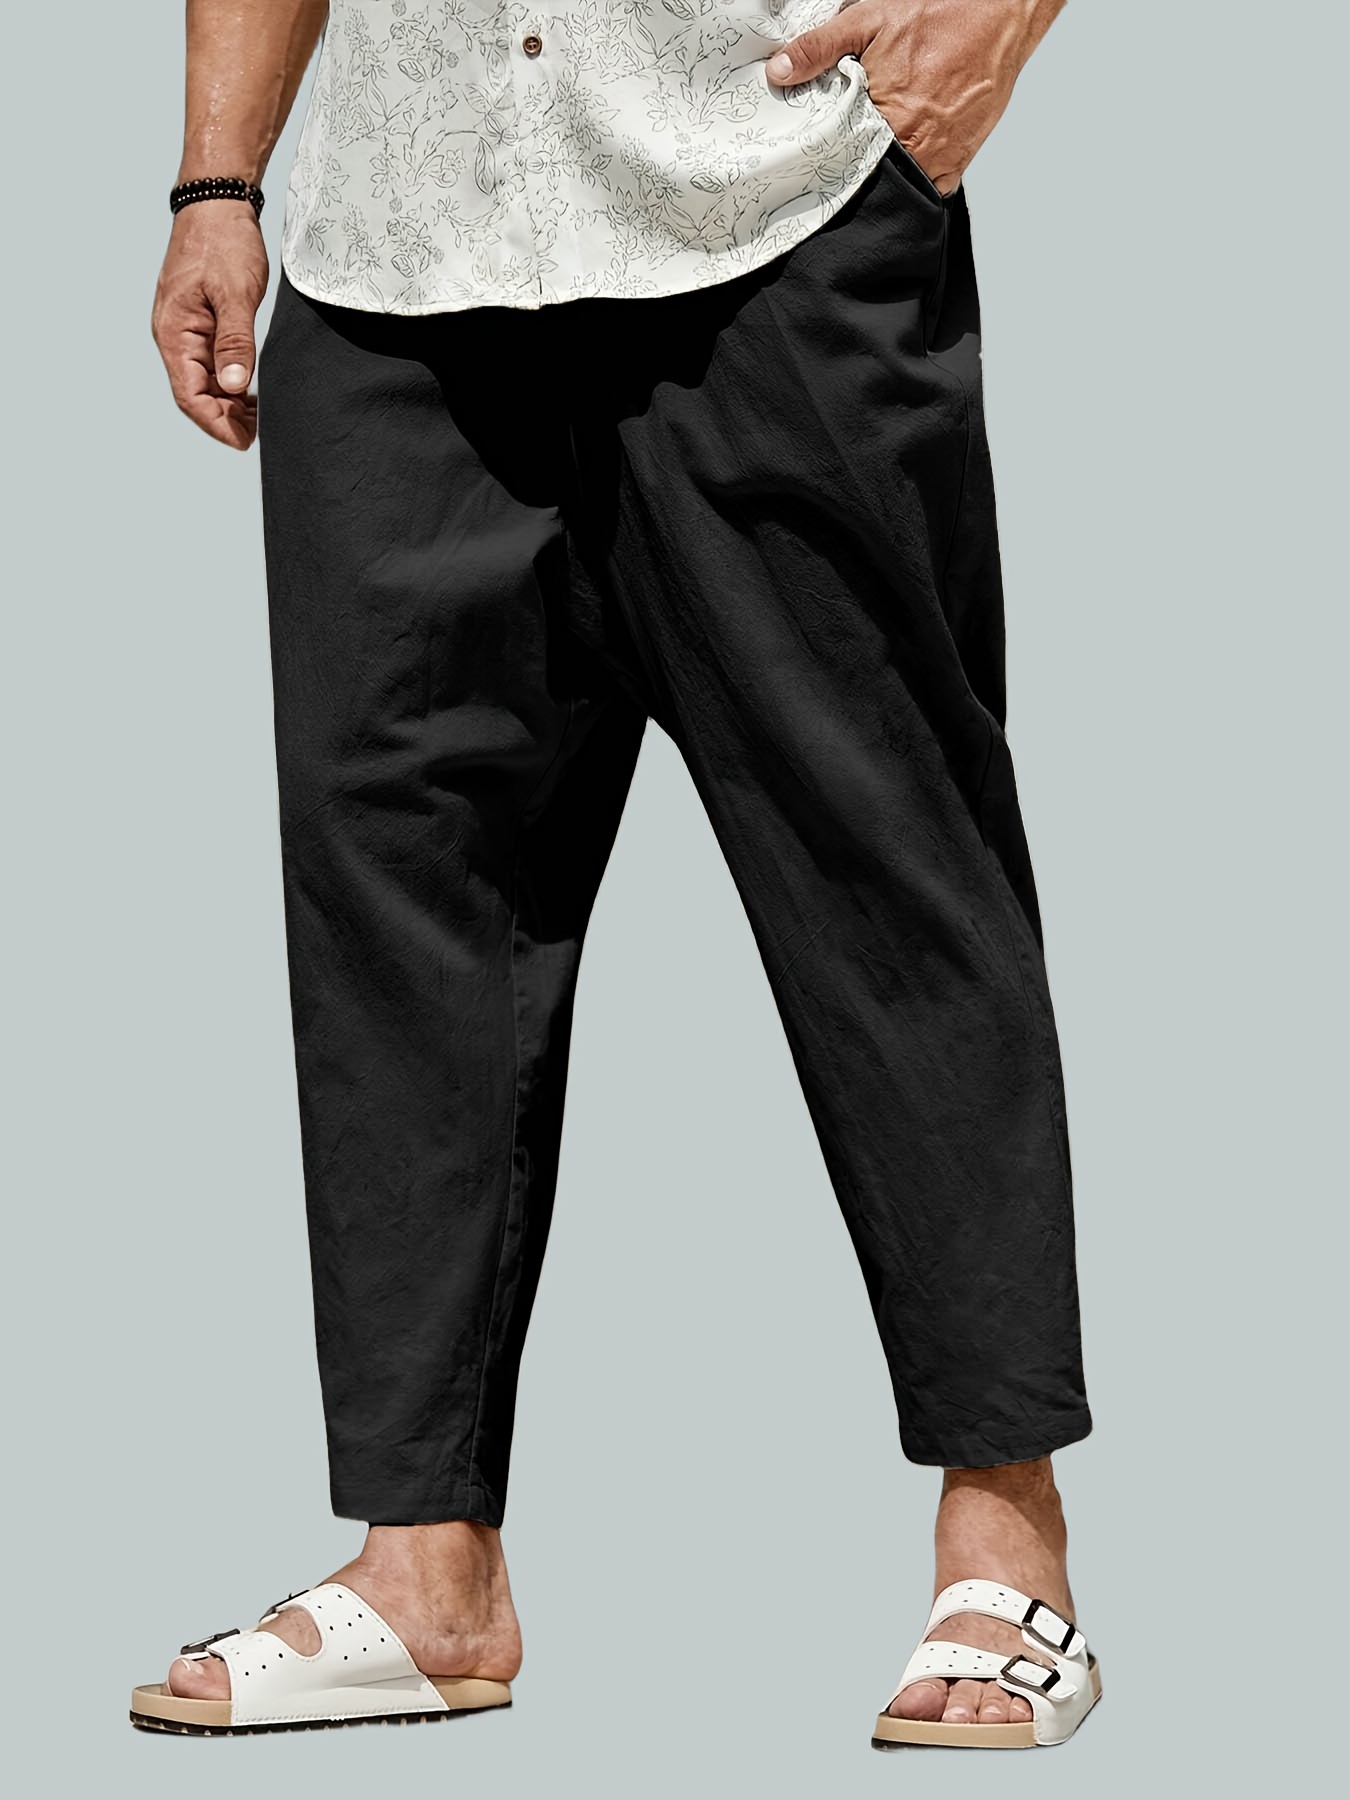 Mens Black Cargo Trousers Fashion Drawstring Hip Hop Harem Cropped Casual  Pants 